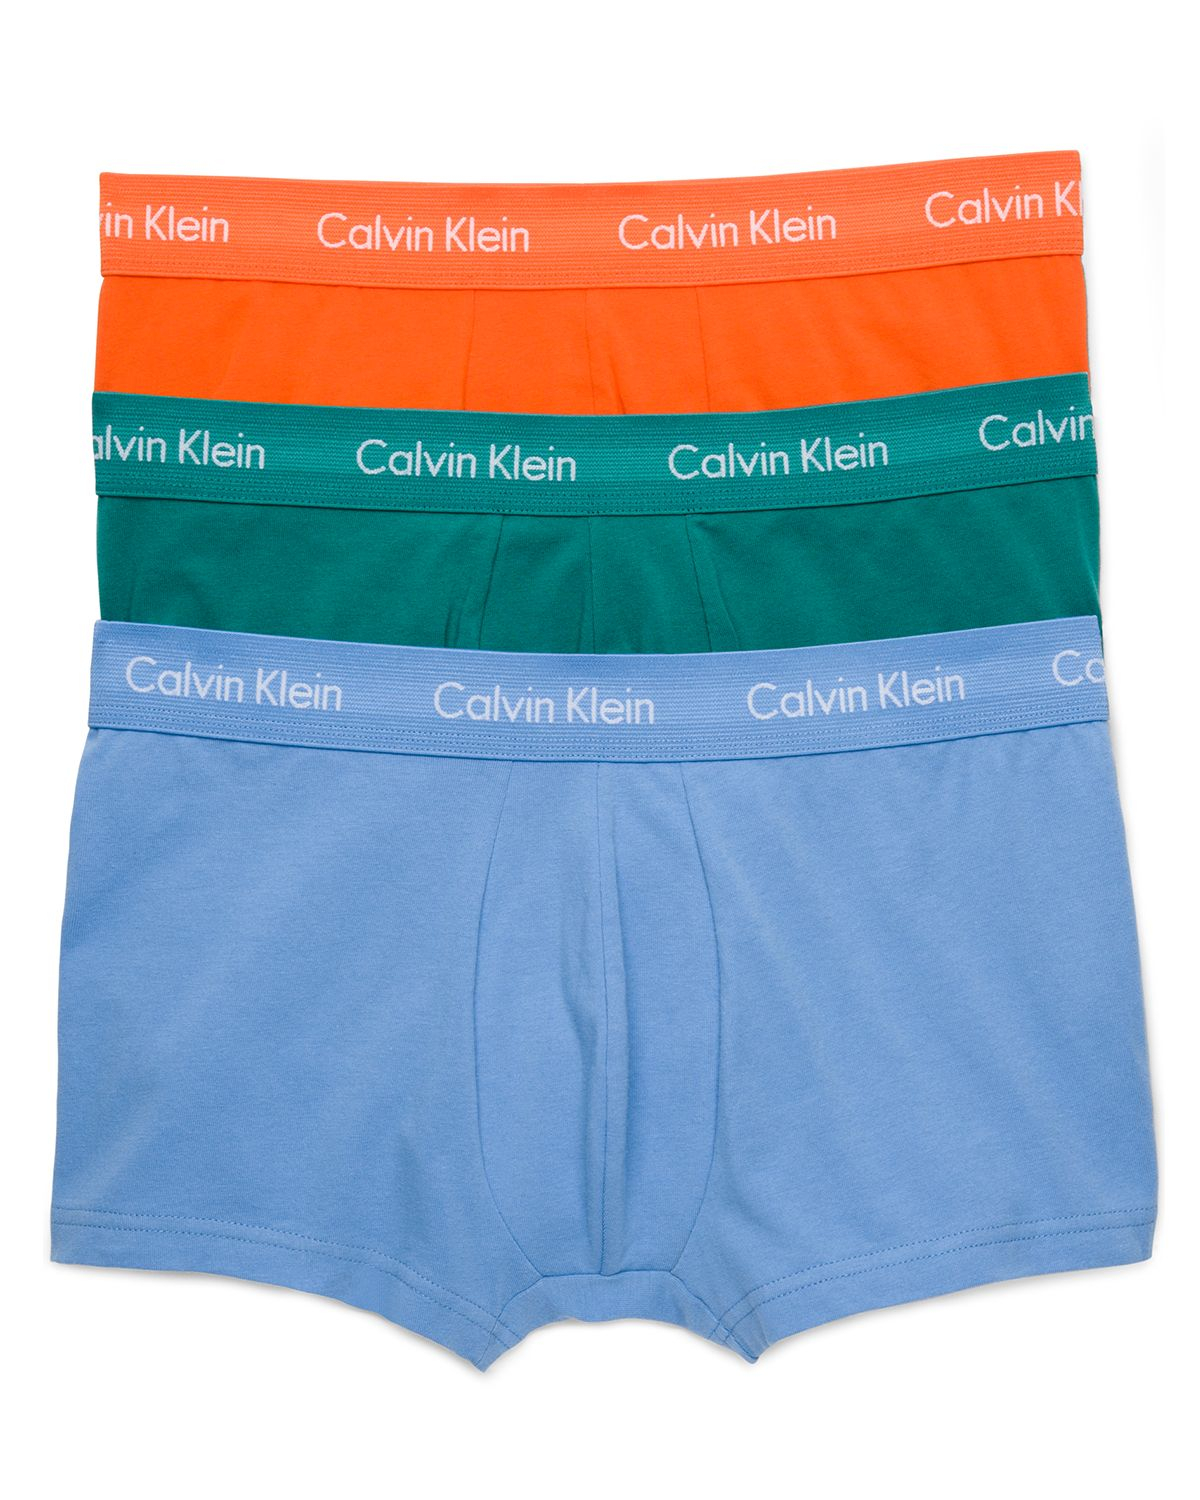 Calvin Klein Cotton Men's Classic Boxer Briefs 3-pack in Sky/Orange ...